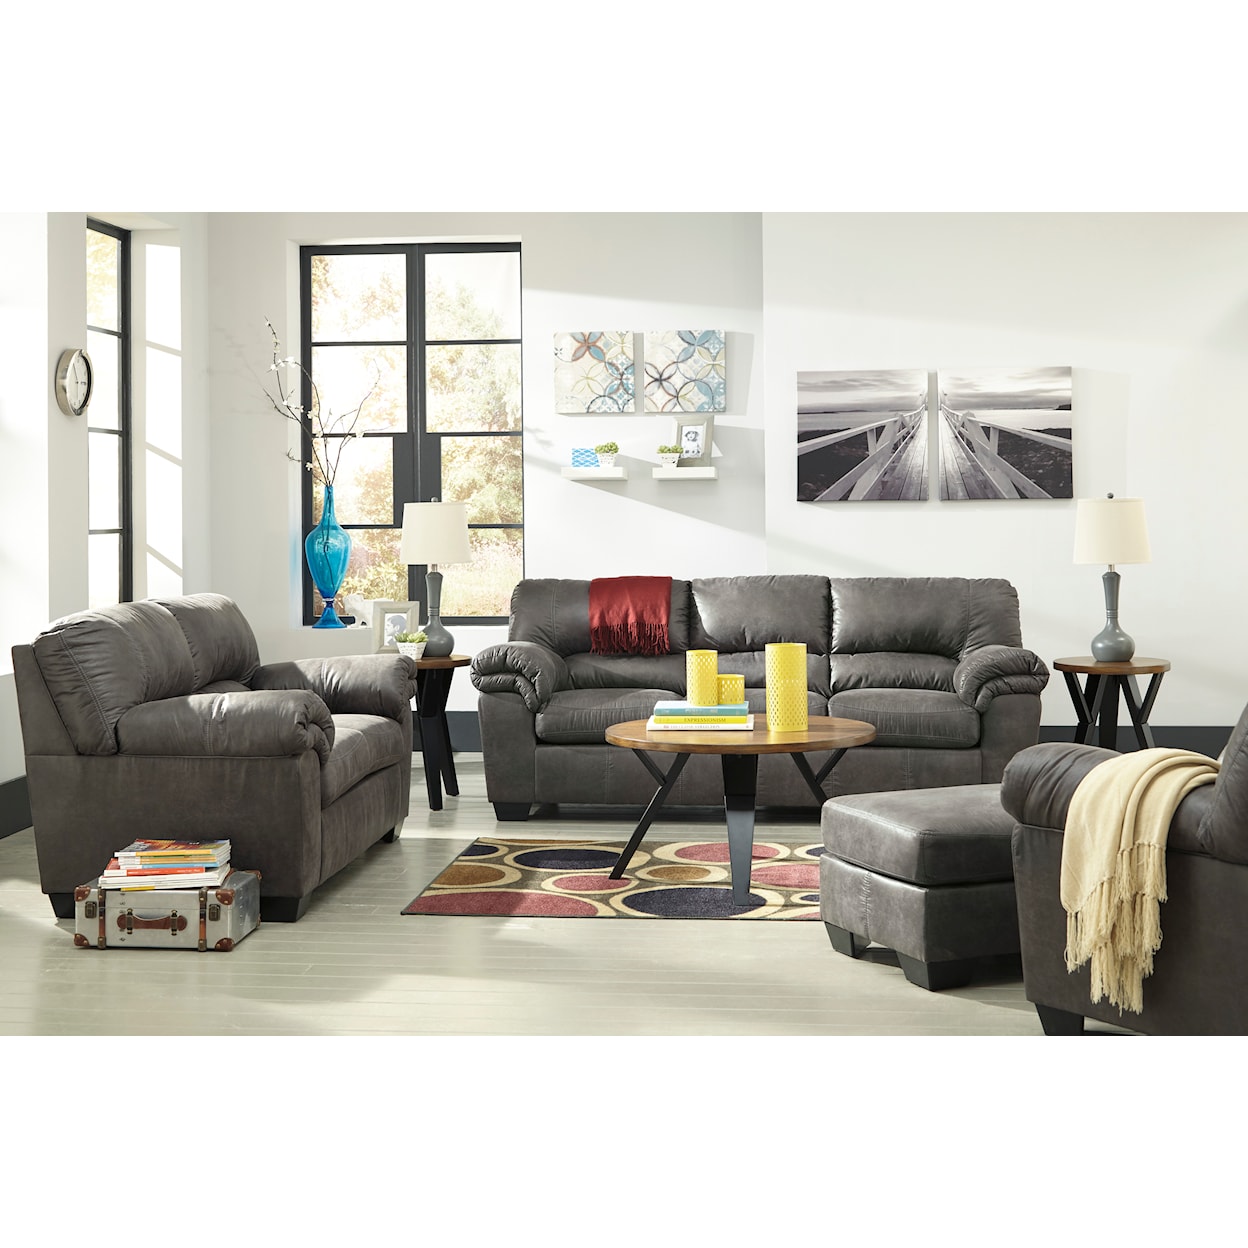 StyleLine LOVEN Sofa, Loveseat, Chair, and Ottoman